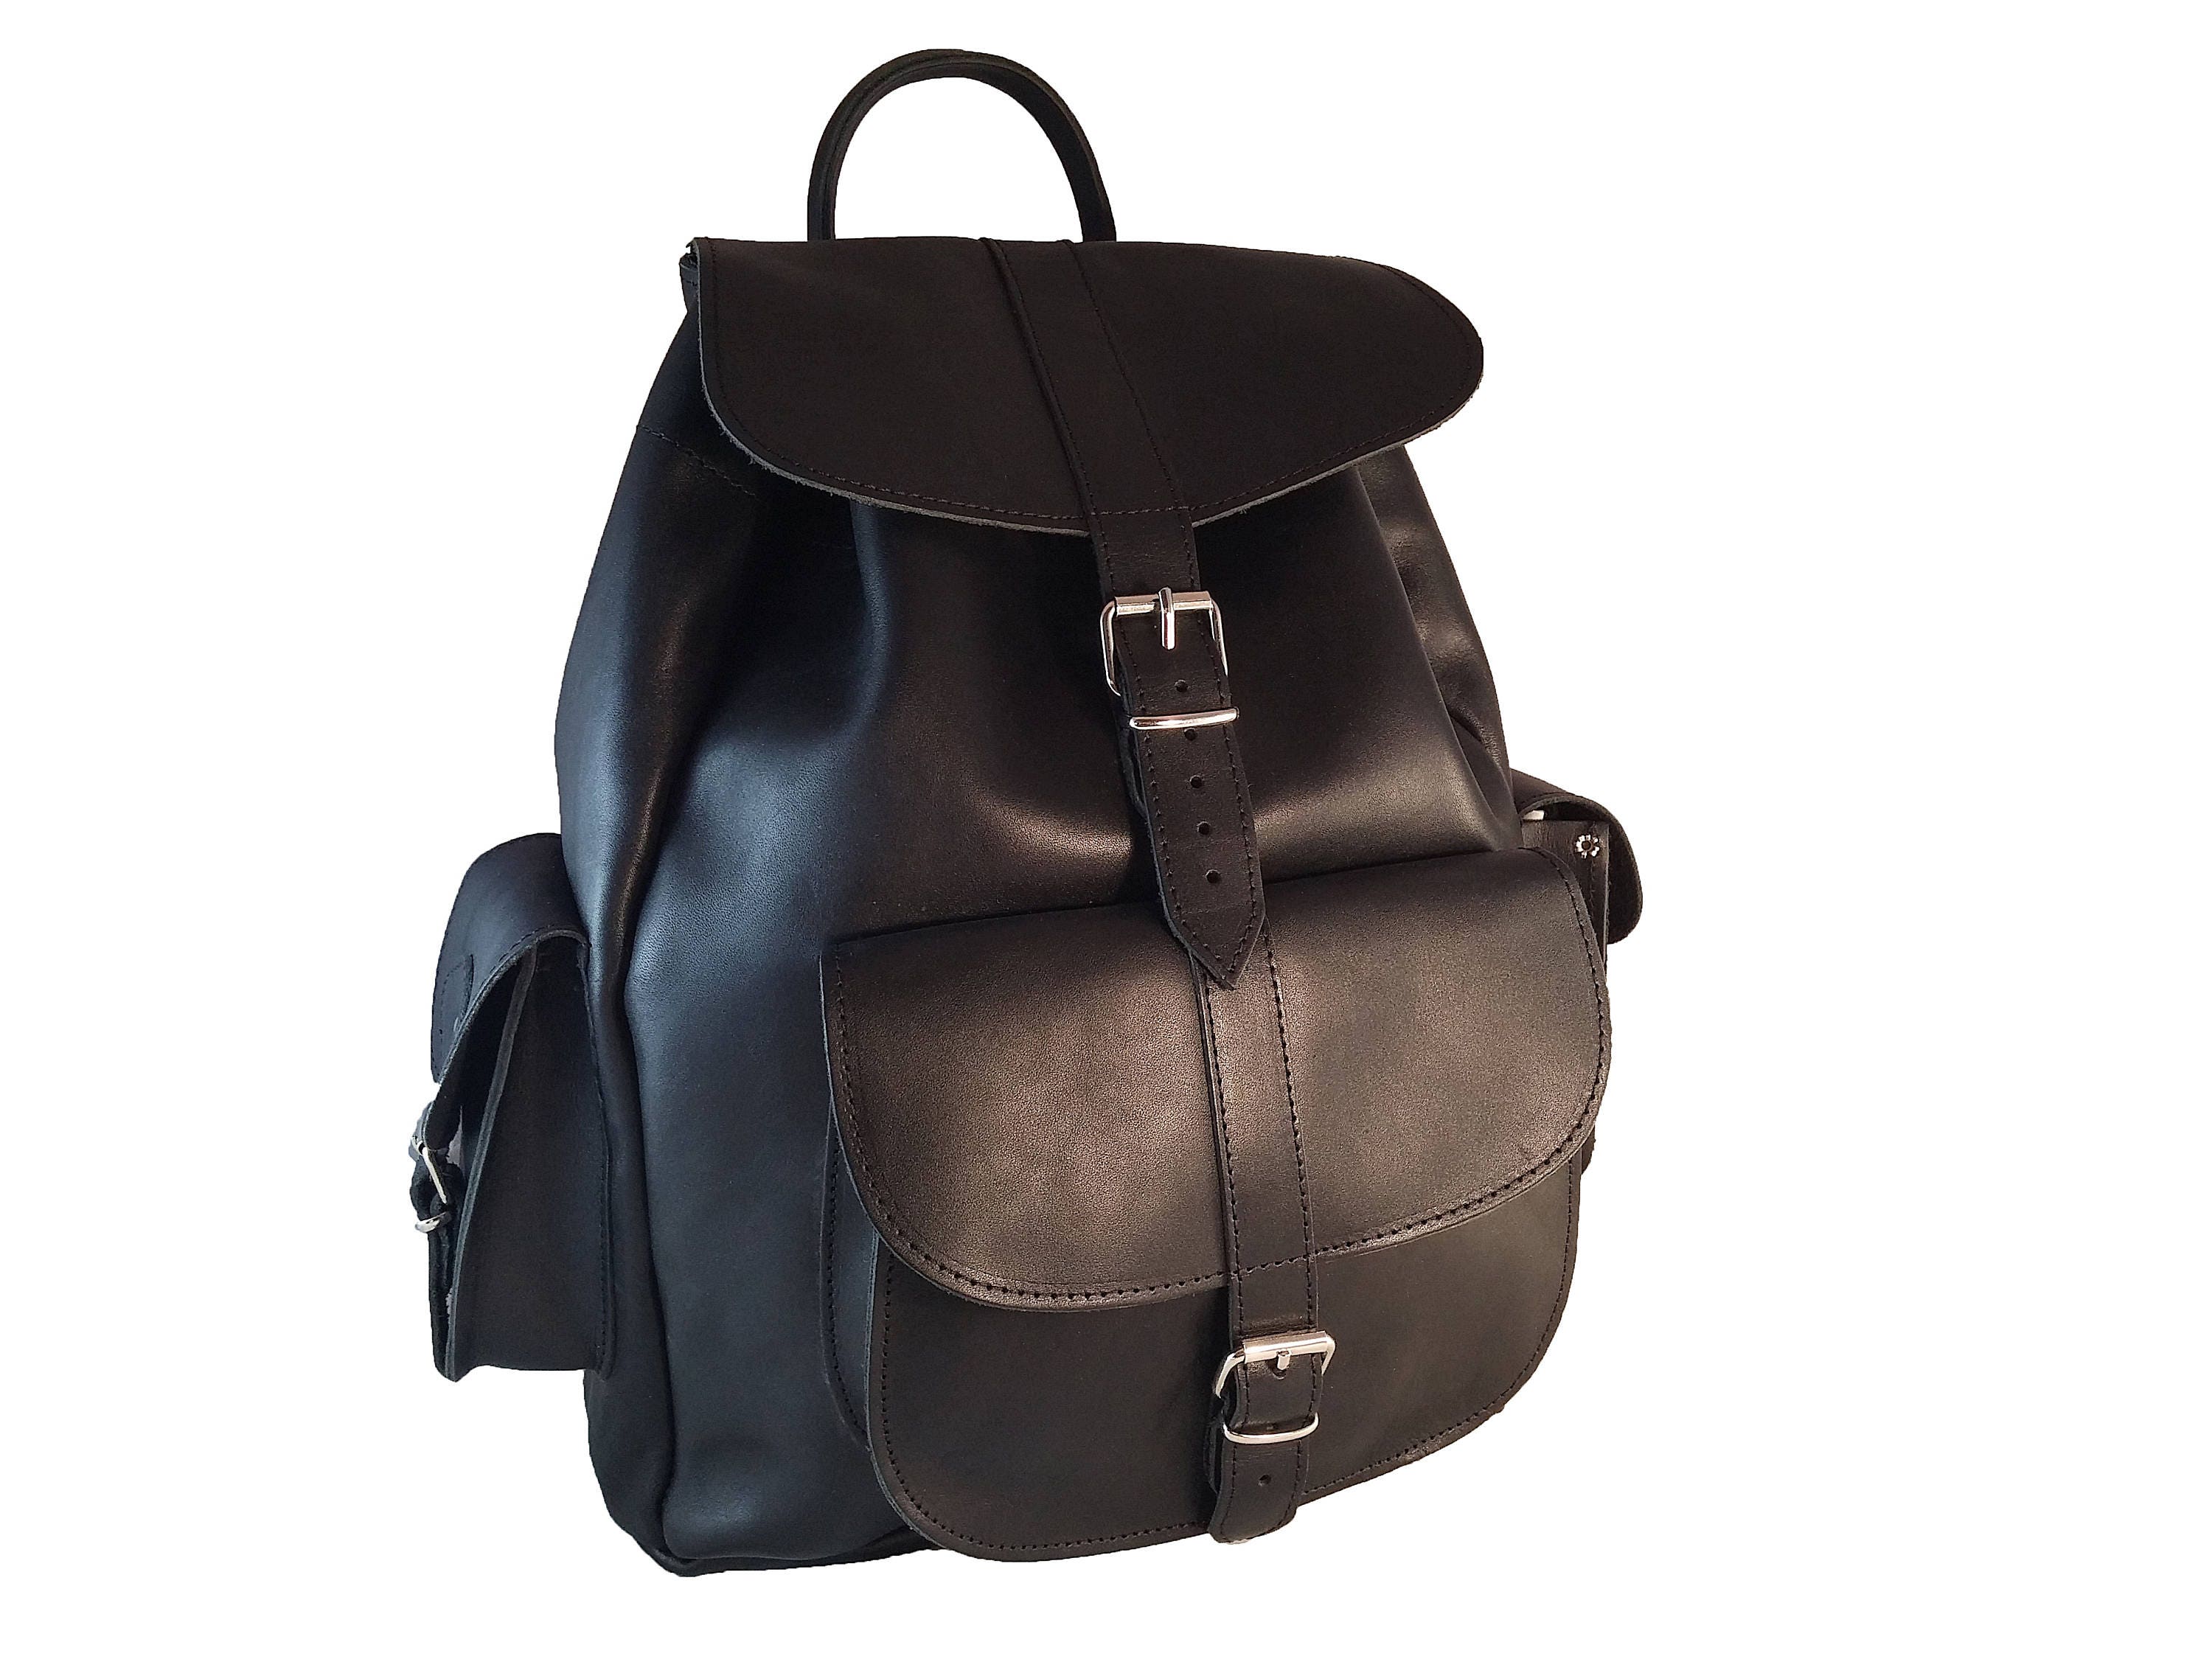 EXTRA LARGE Leather Backpack Travel Backpack Satchel.